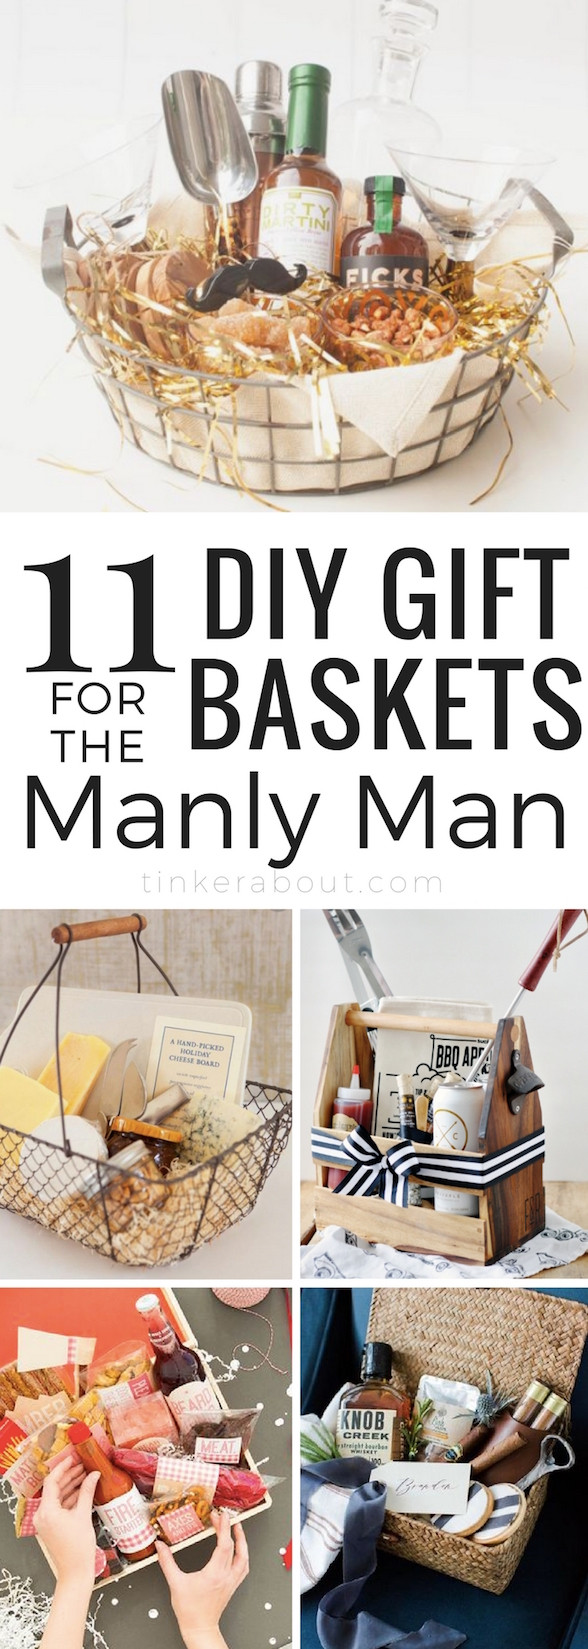 Best Gift Basket Ideas
 11 Best Gift Basket Ideas For Him